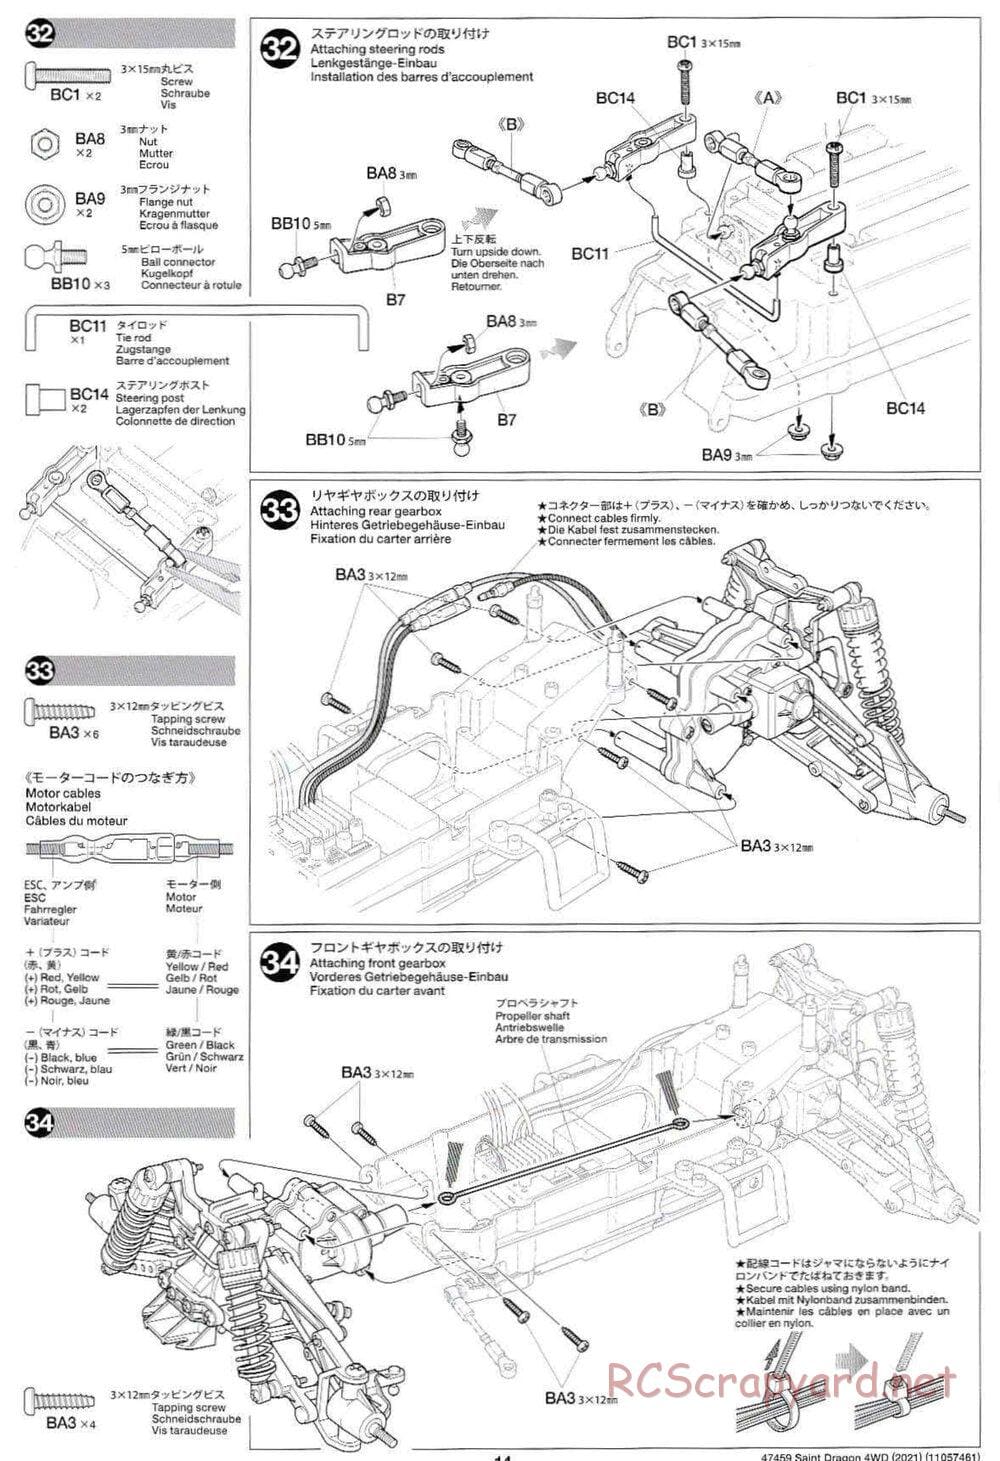 Tamiya - Saint Dragon (2021) Chassis - Manual - Page 14